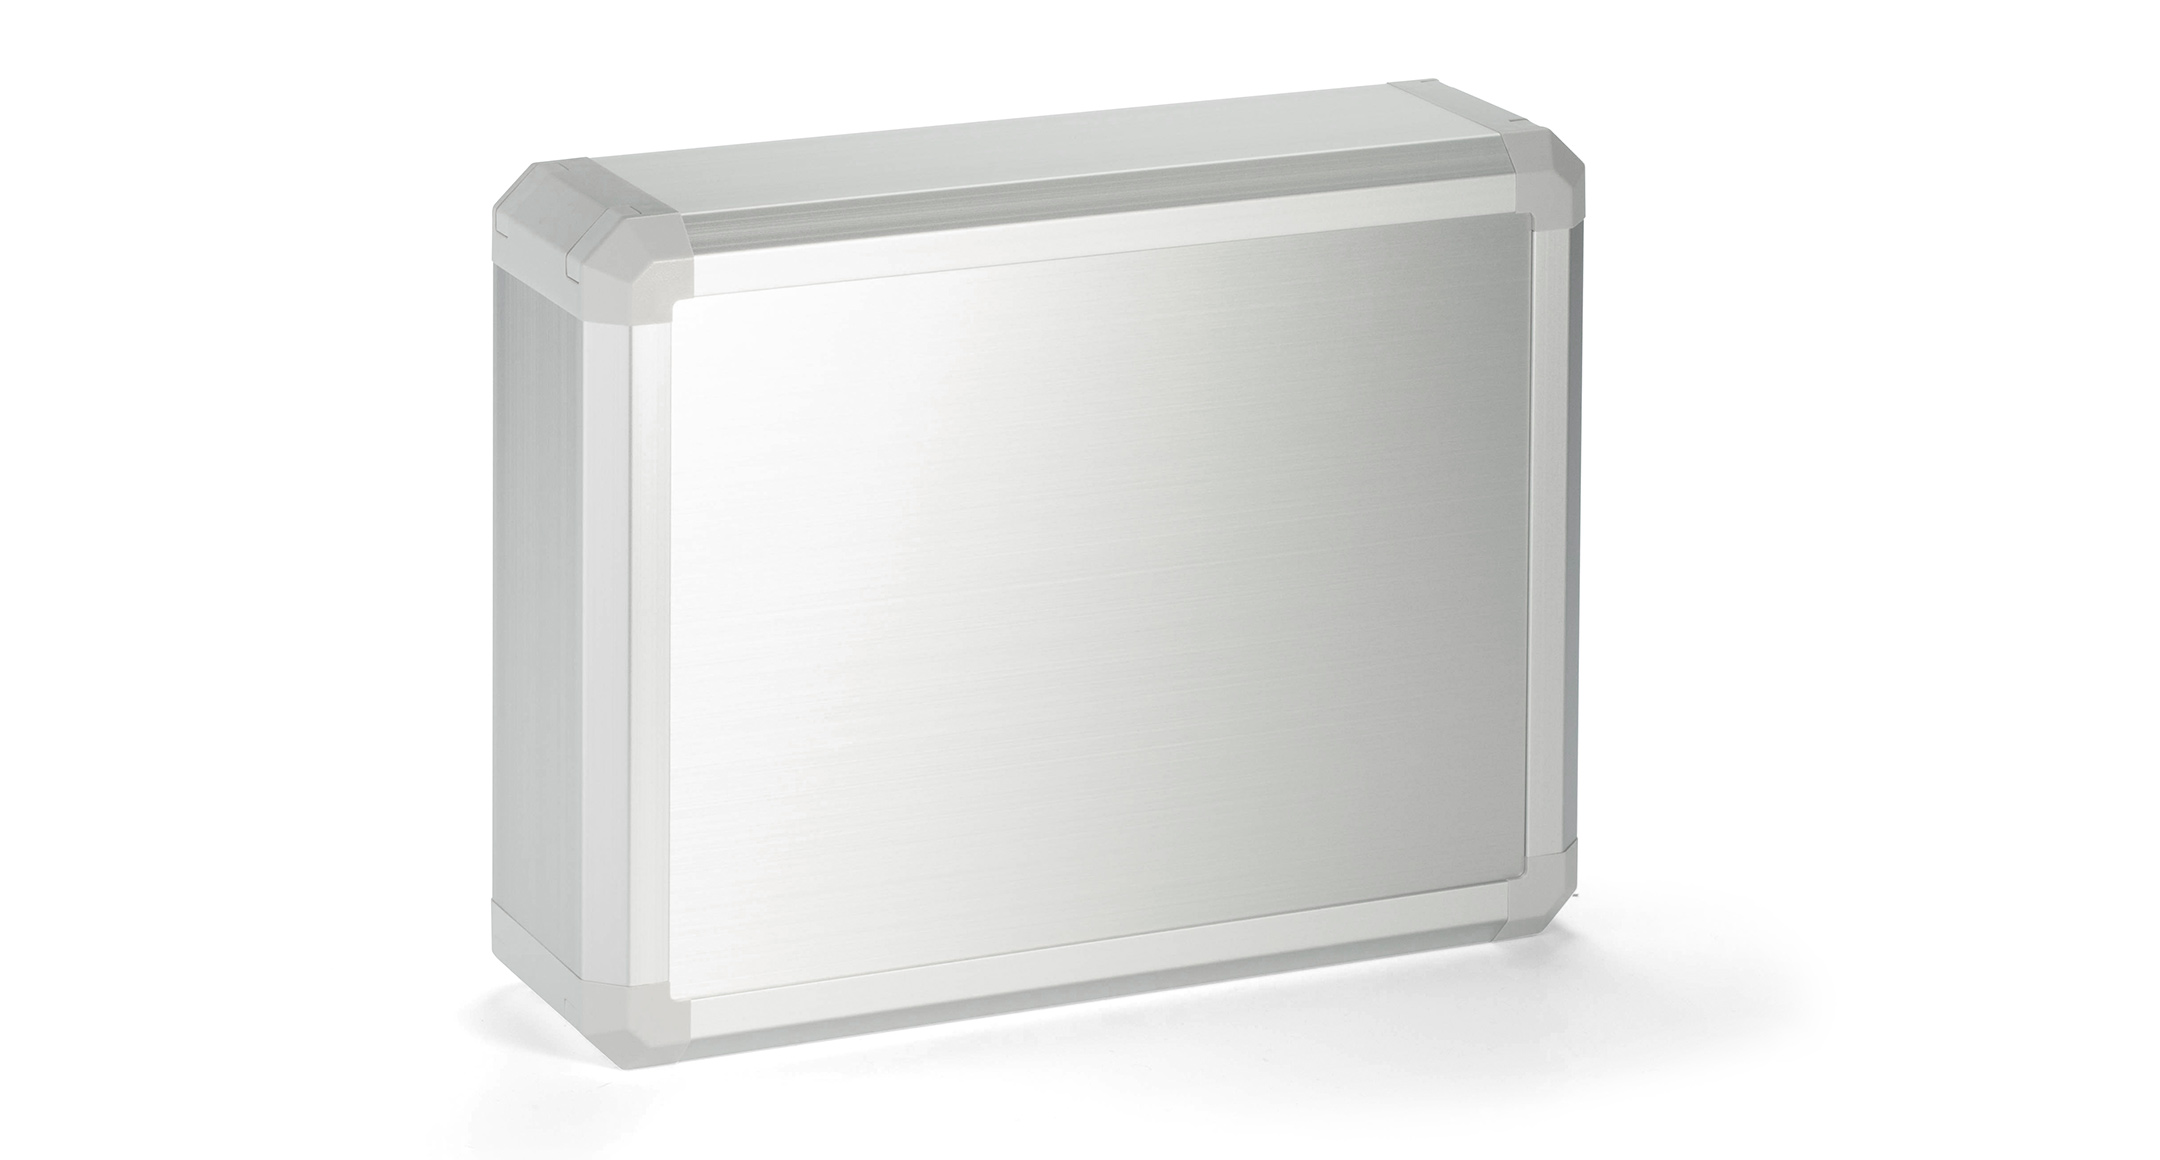 ALUMINUM CONTROL BOX - FC series:Silver/Gray